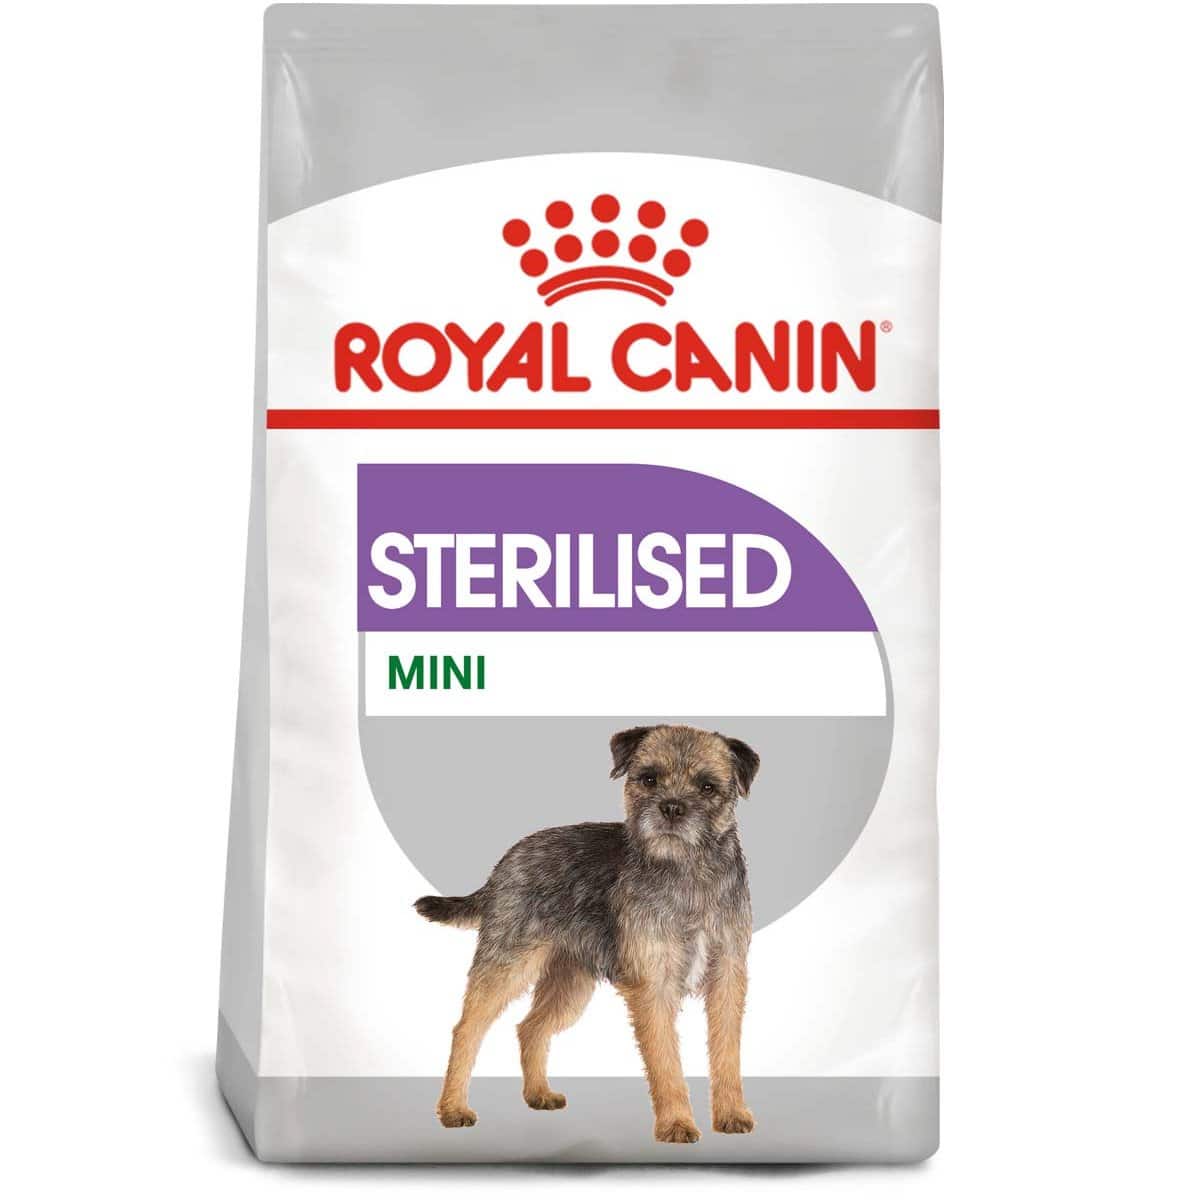 ROYAL CANIN STERILISED MINI Trockenfutter für kastrierte kleine Hunde 3kg